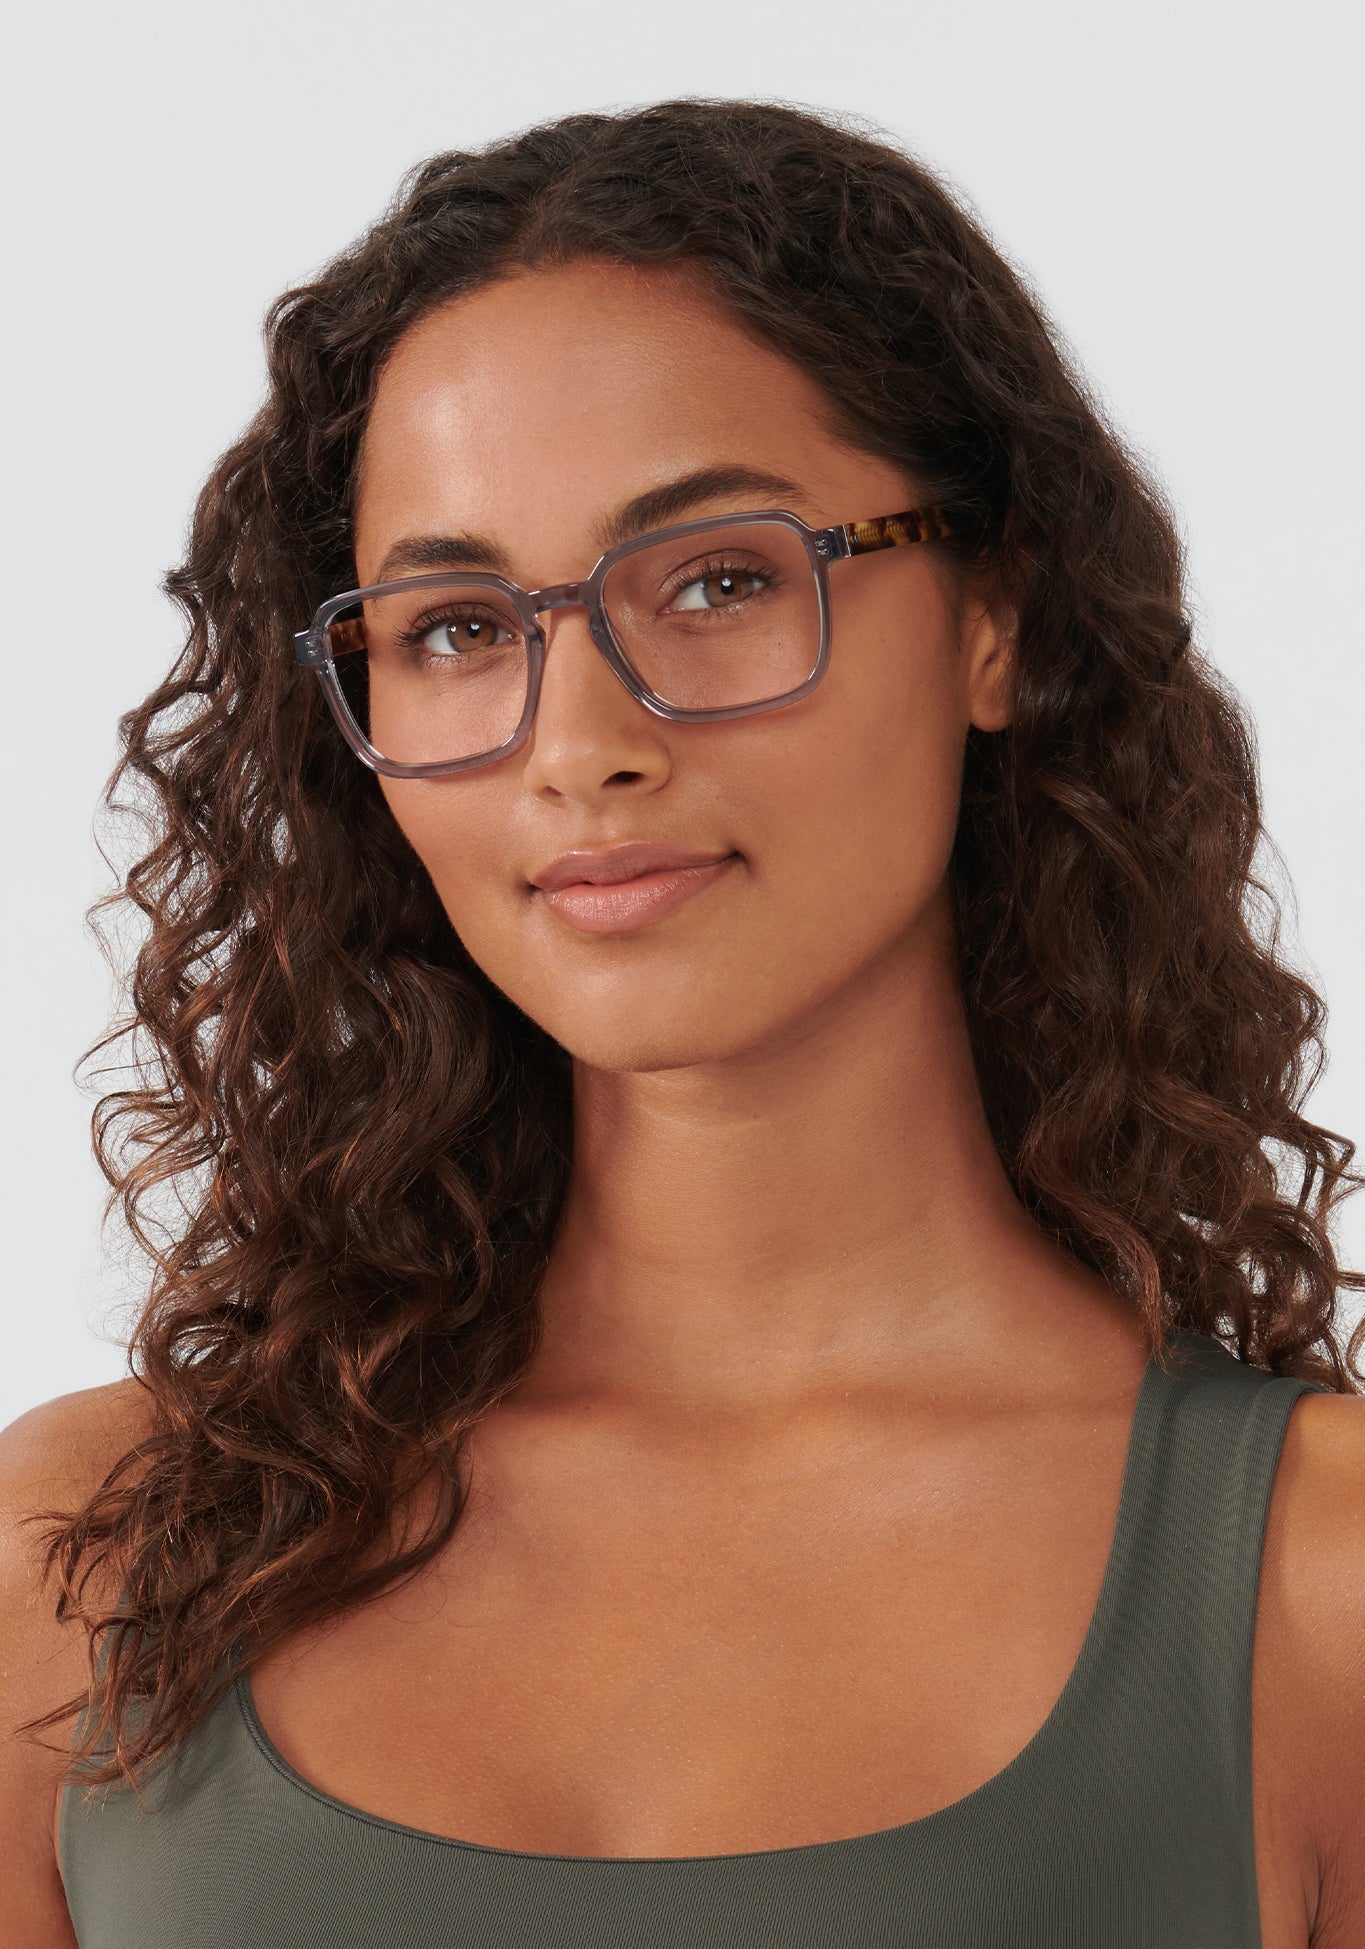 RUFFIN | Ash + Chai Handcrafted, Grey and Tortoise Shell Acetate KREWE Eyeglasses womens model | Model: Meli